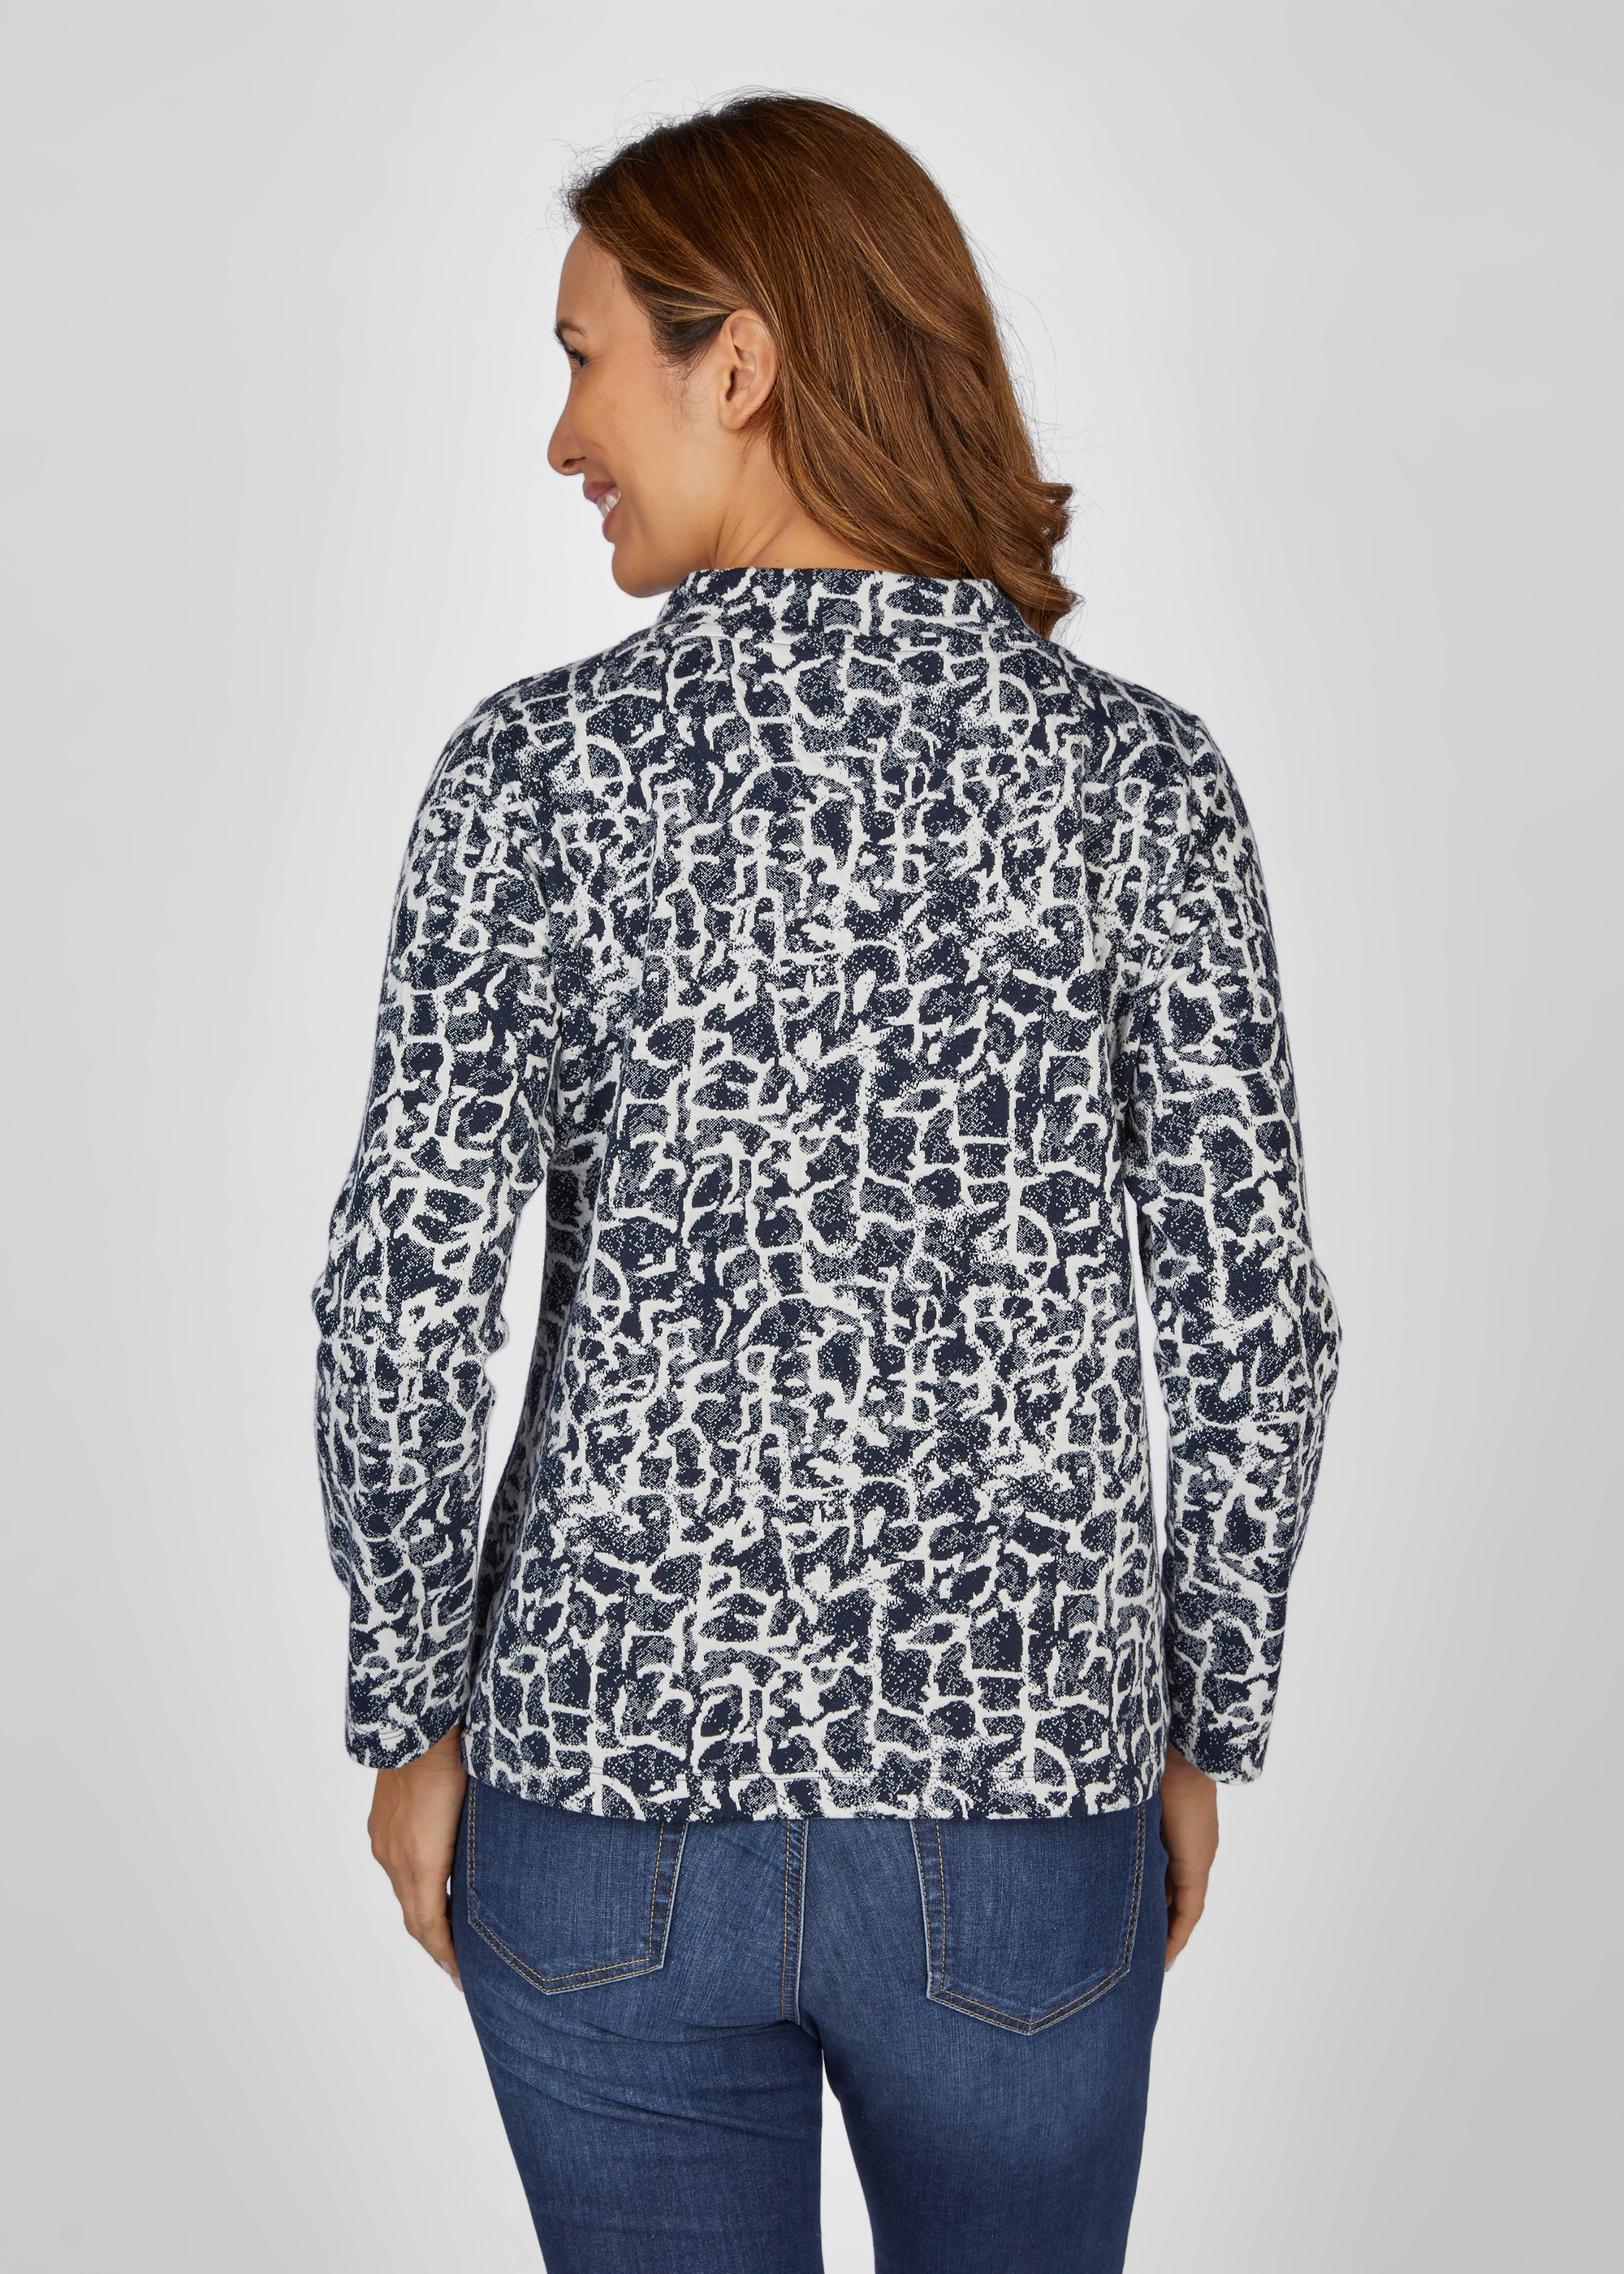 Sweatshirt mit abstraktem Muster